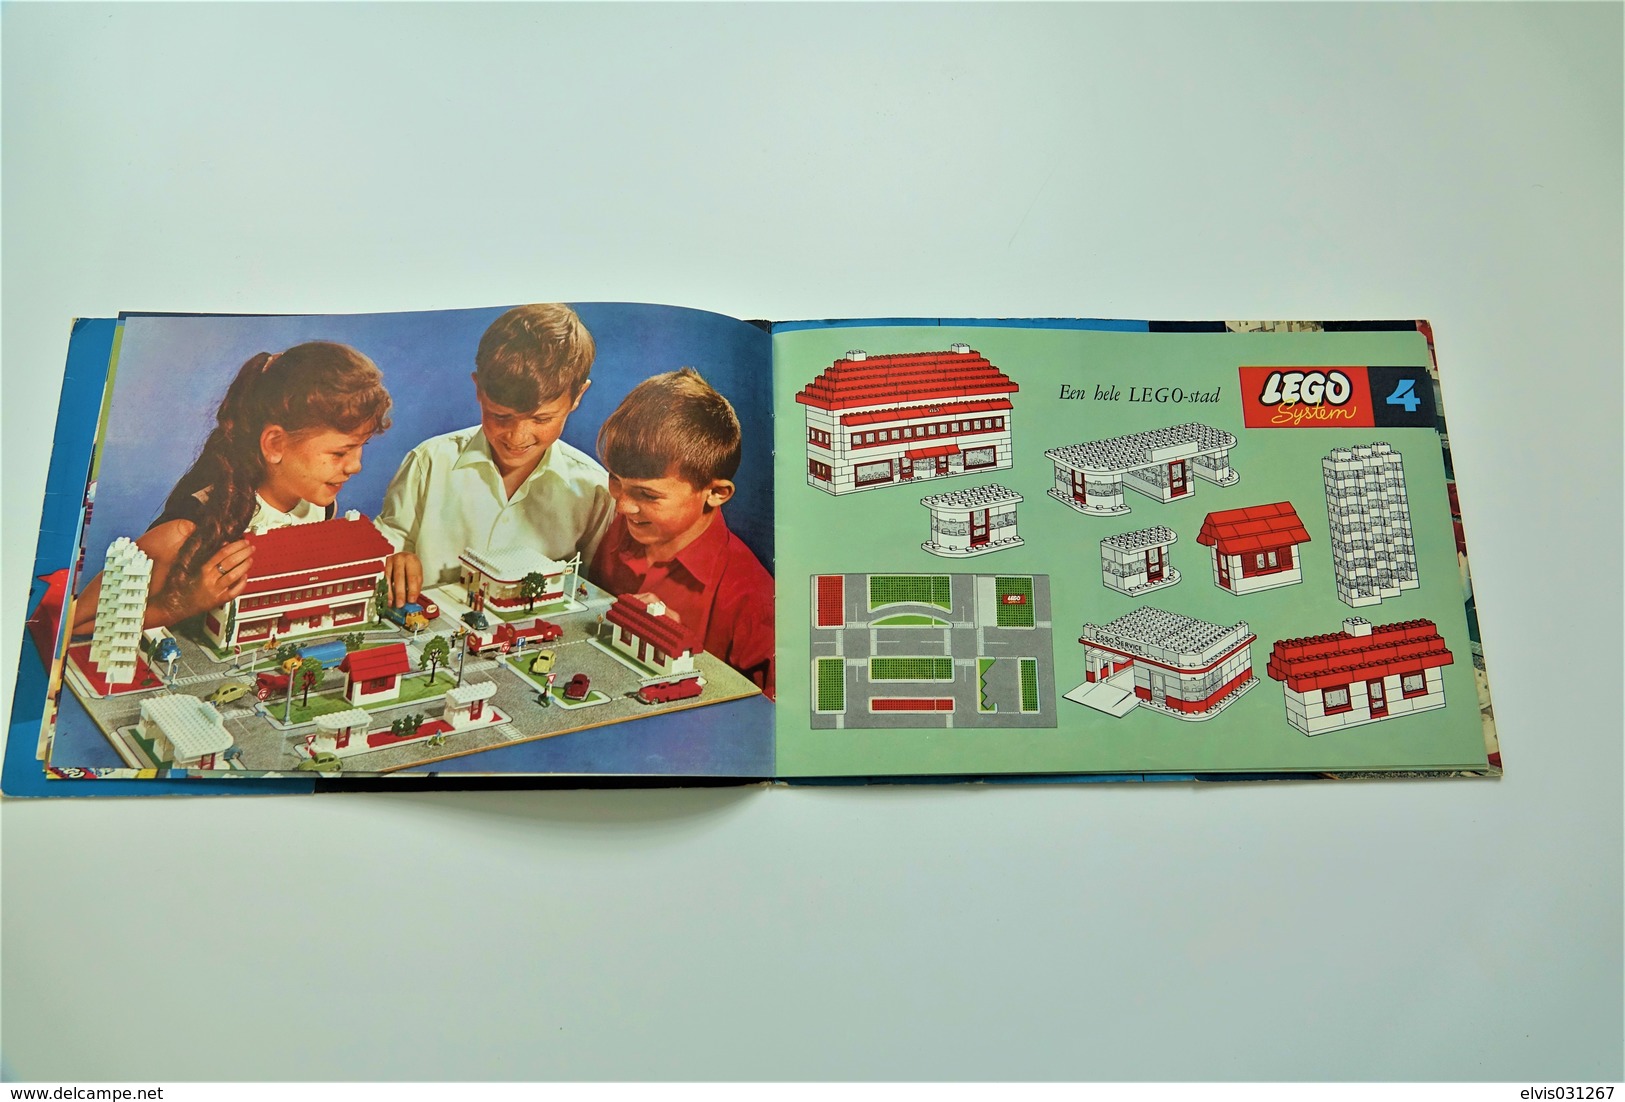 LEGO - IDEEËNBOEK - RaRe - Collectors Item - Original Lego System 1960's - Vintage - Catalogues